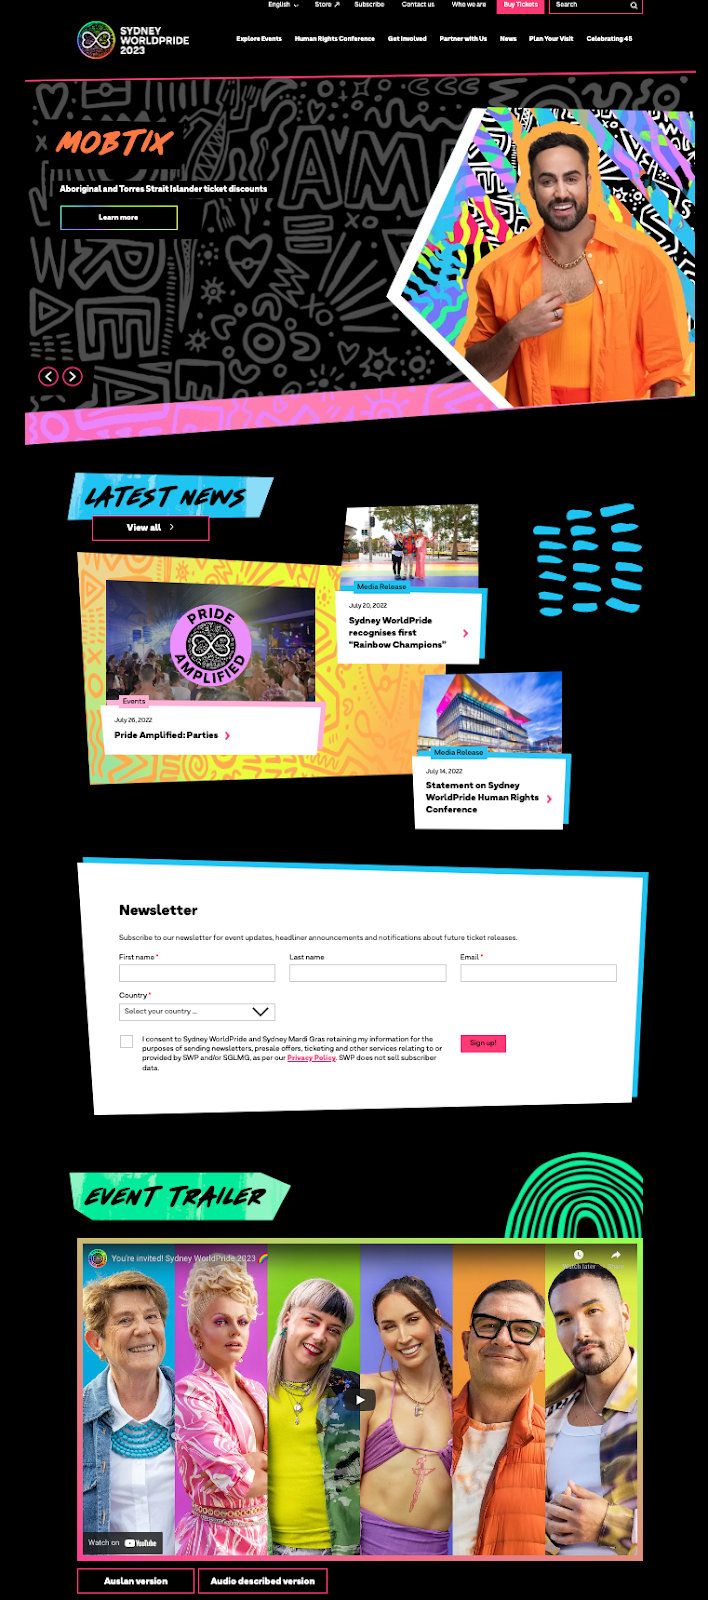 Featured Calendar: Sydney World Pride homepage